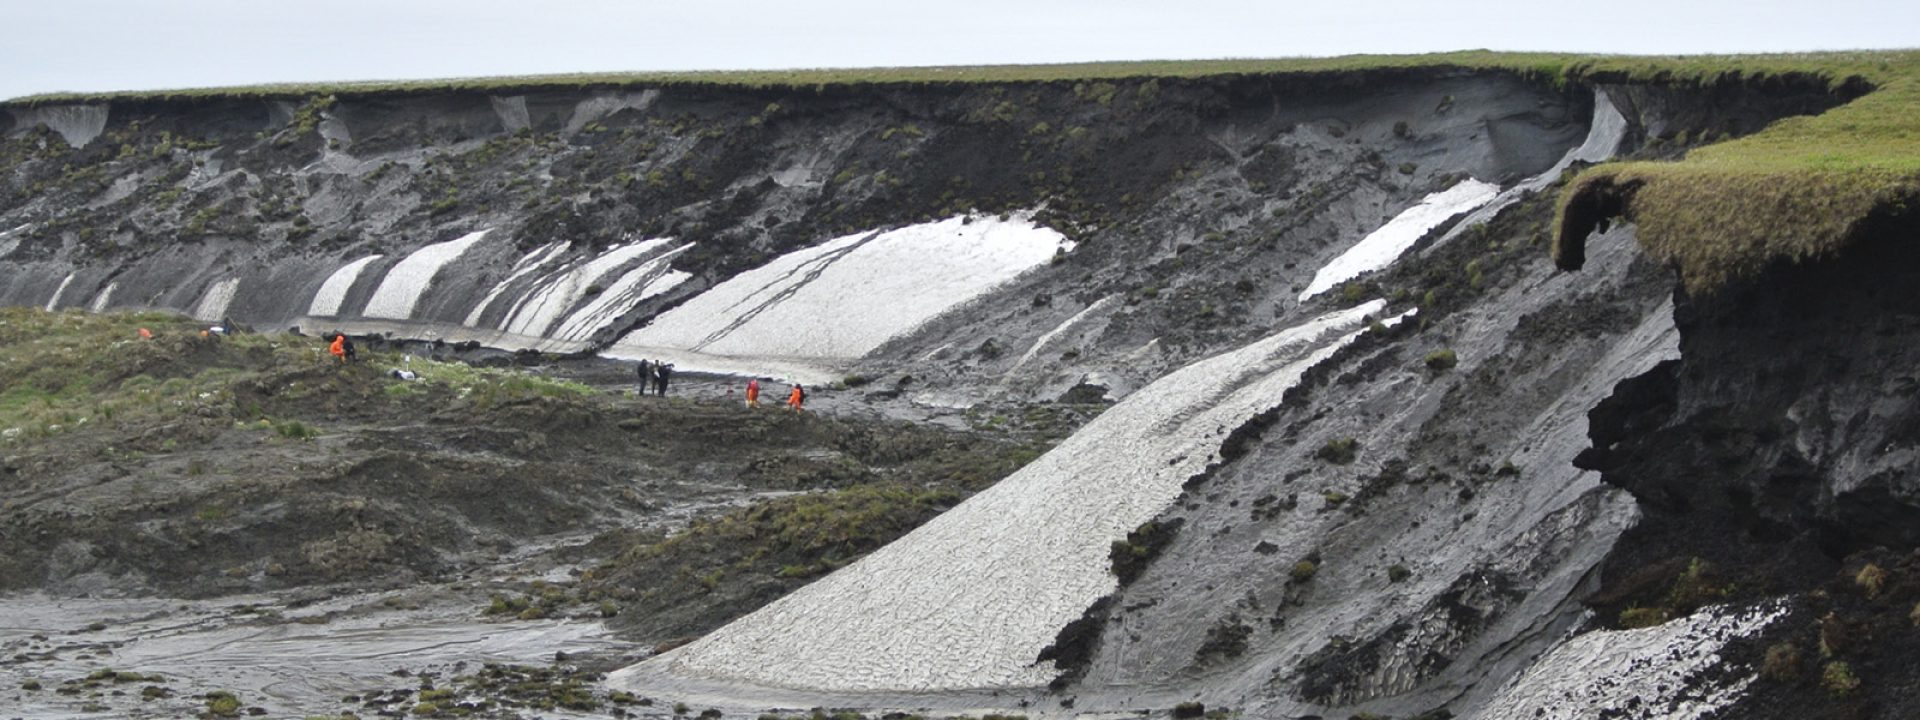 Melting permafrost: the threat of prehistoric mud